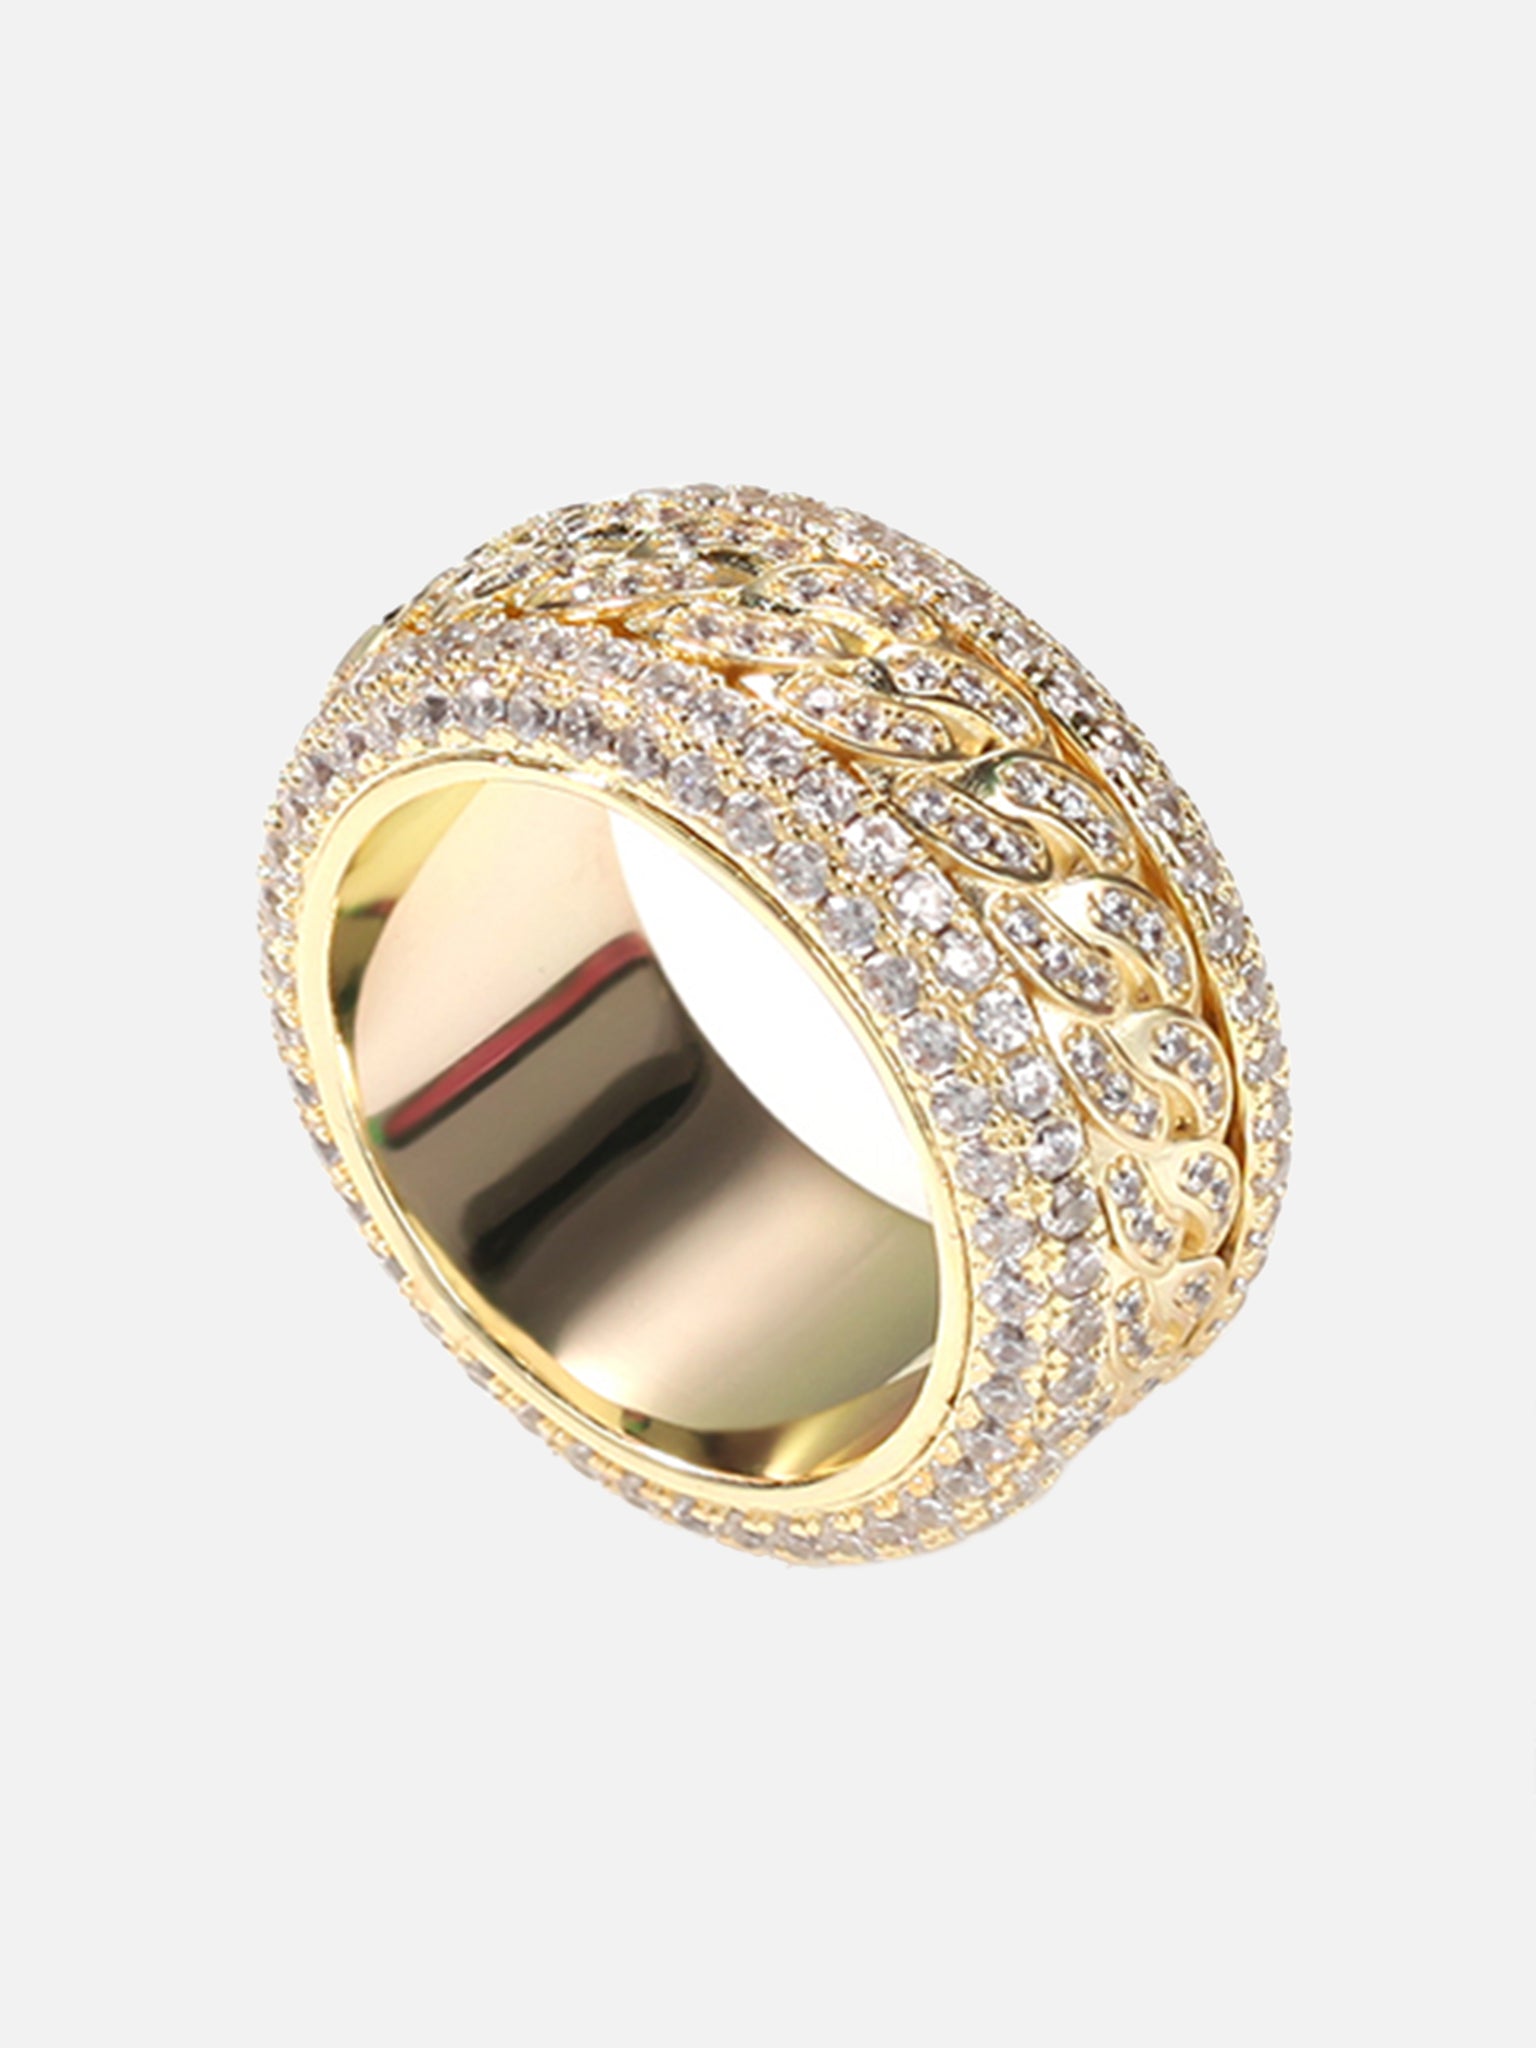 Thesupermade Full Diamond Spinnable Ring